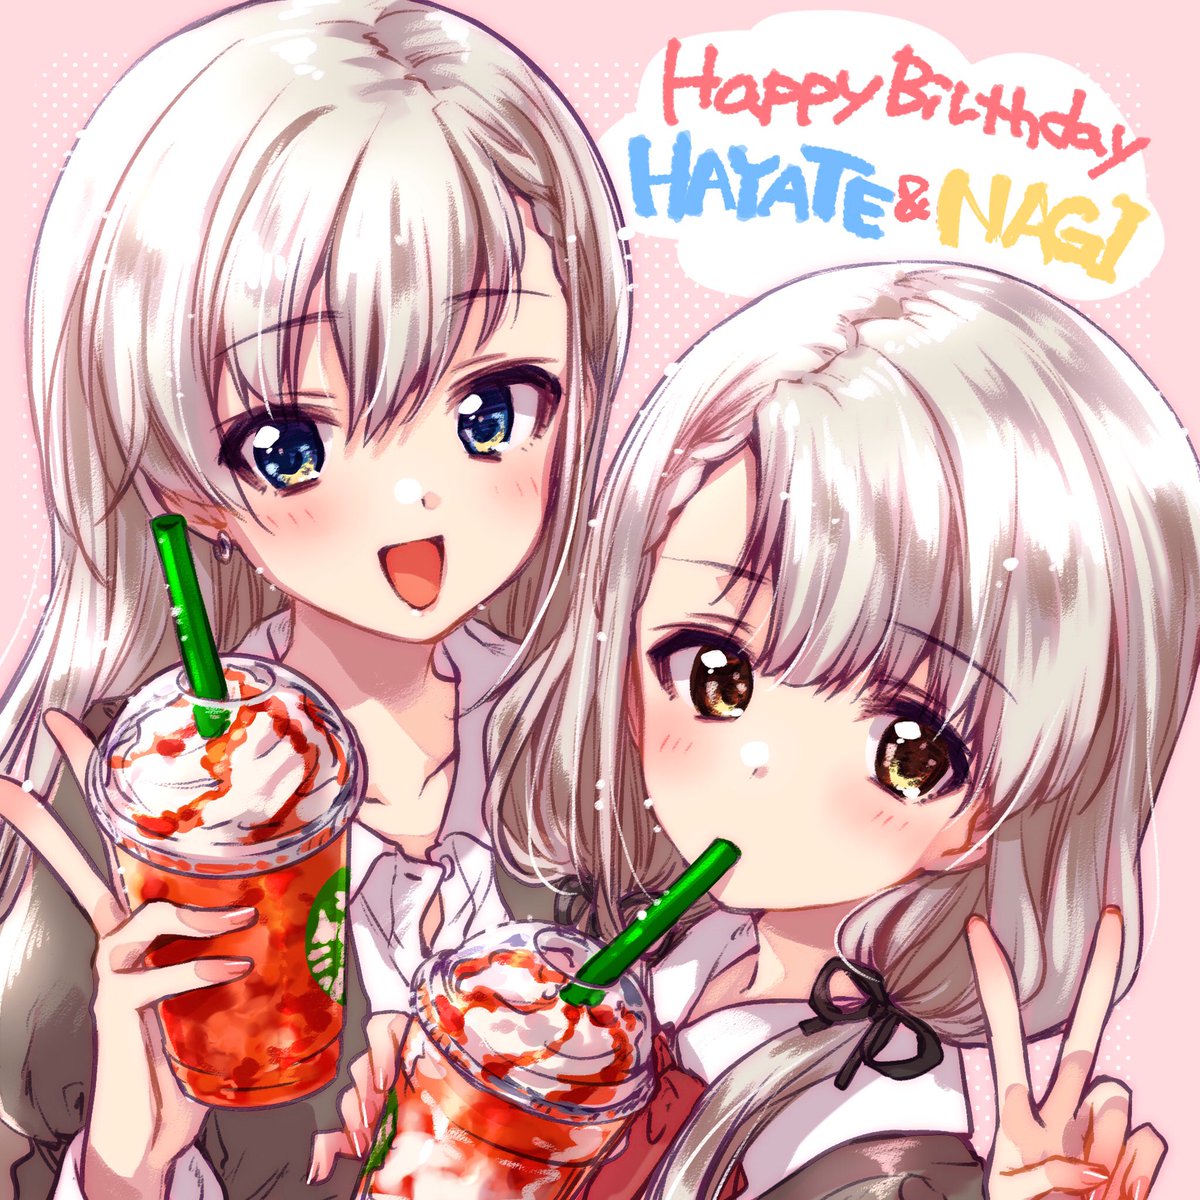 hisakawa hayate ,hisakawa nagi multiple girls 2girls twins siblings drinking straw sisters v  illustration images